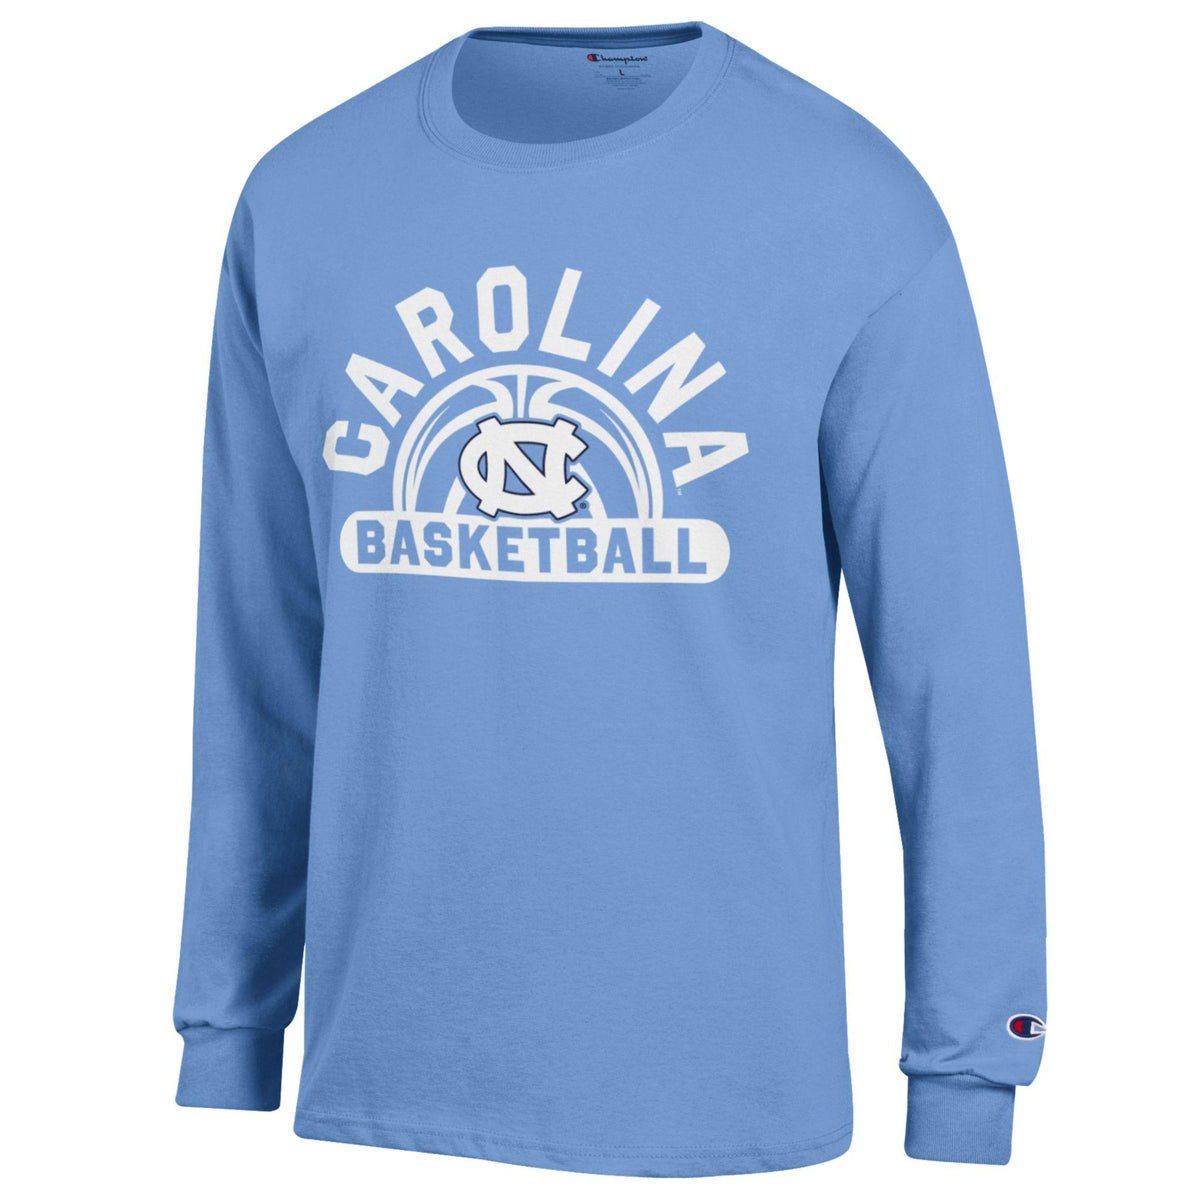 Carolina Basketball Long-Sleeve Shirt